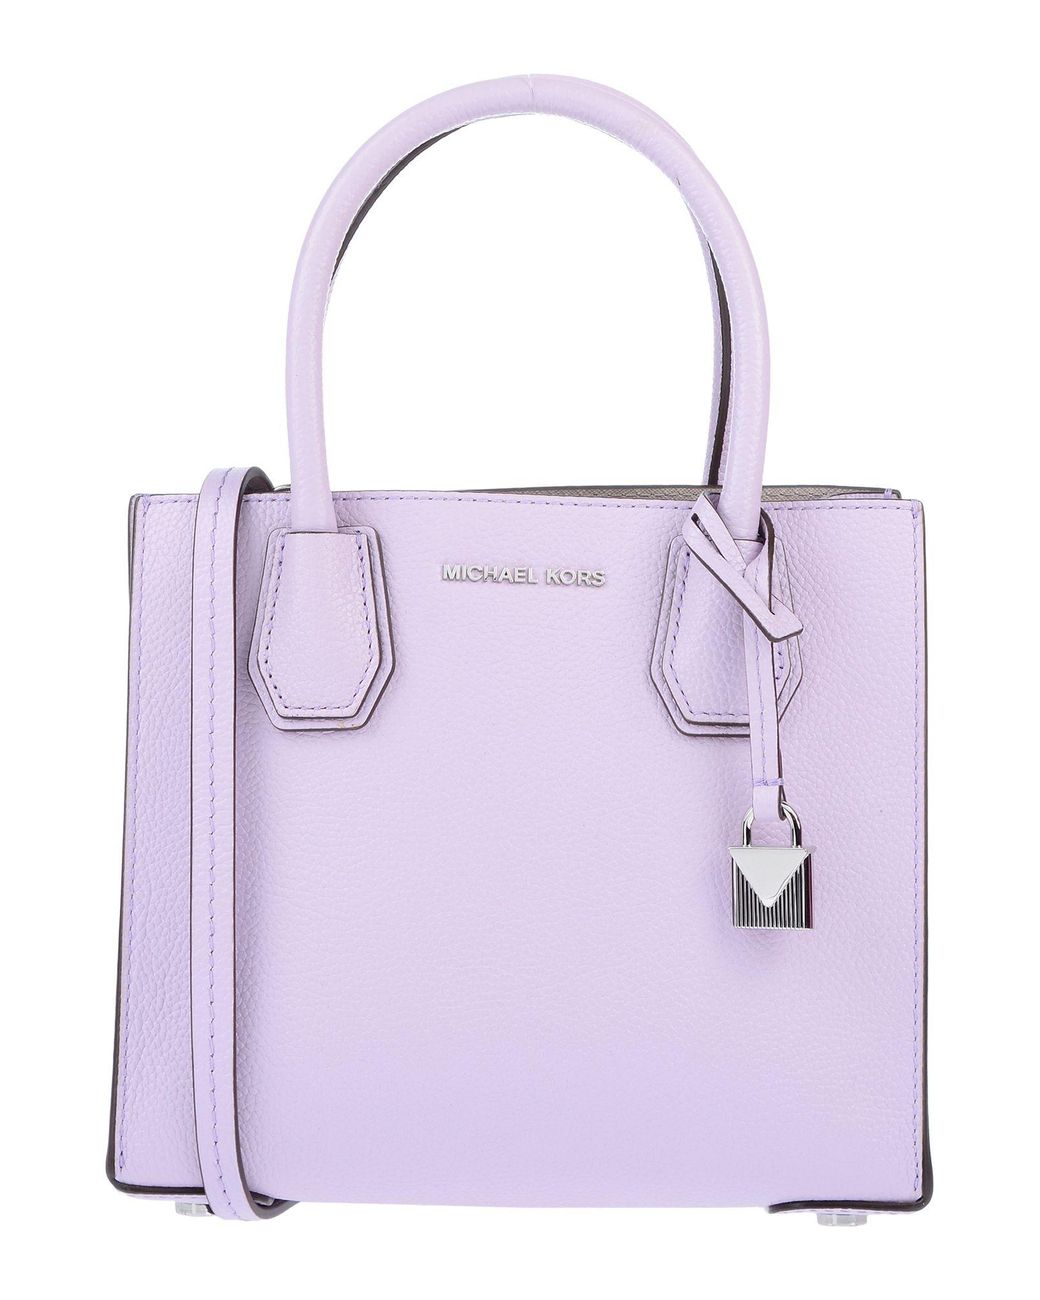 Top 62+ imagen michael kors lilac purse